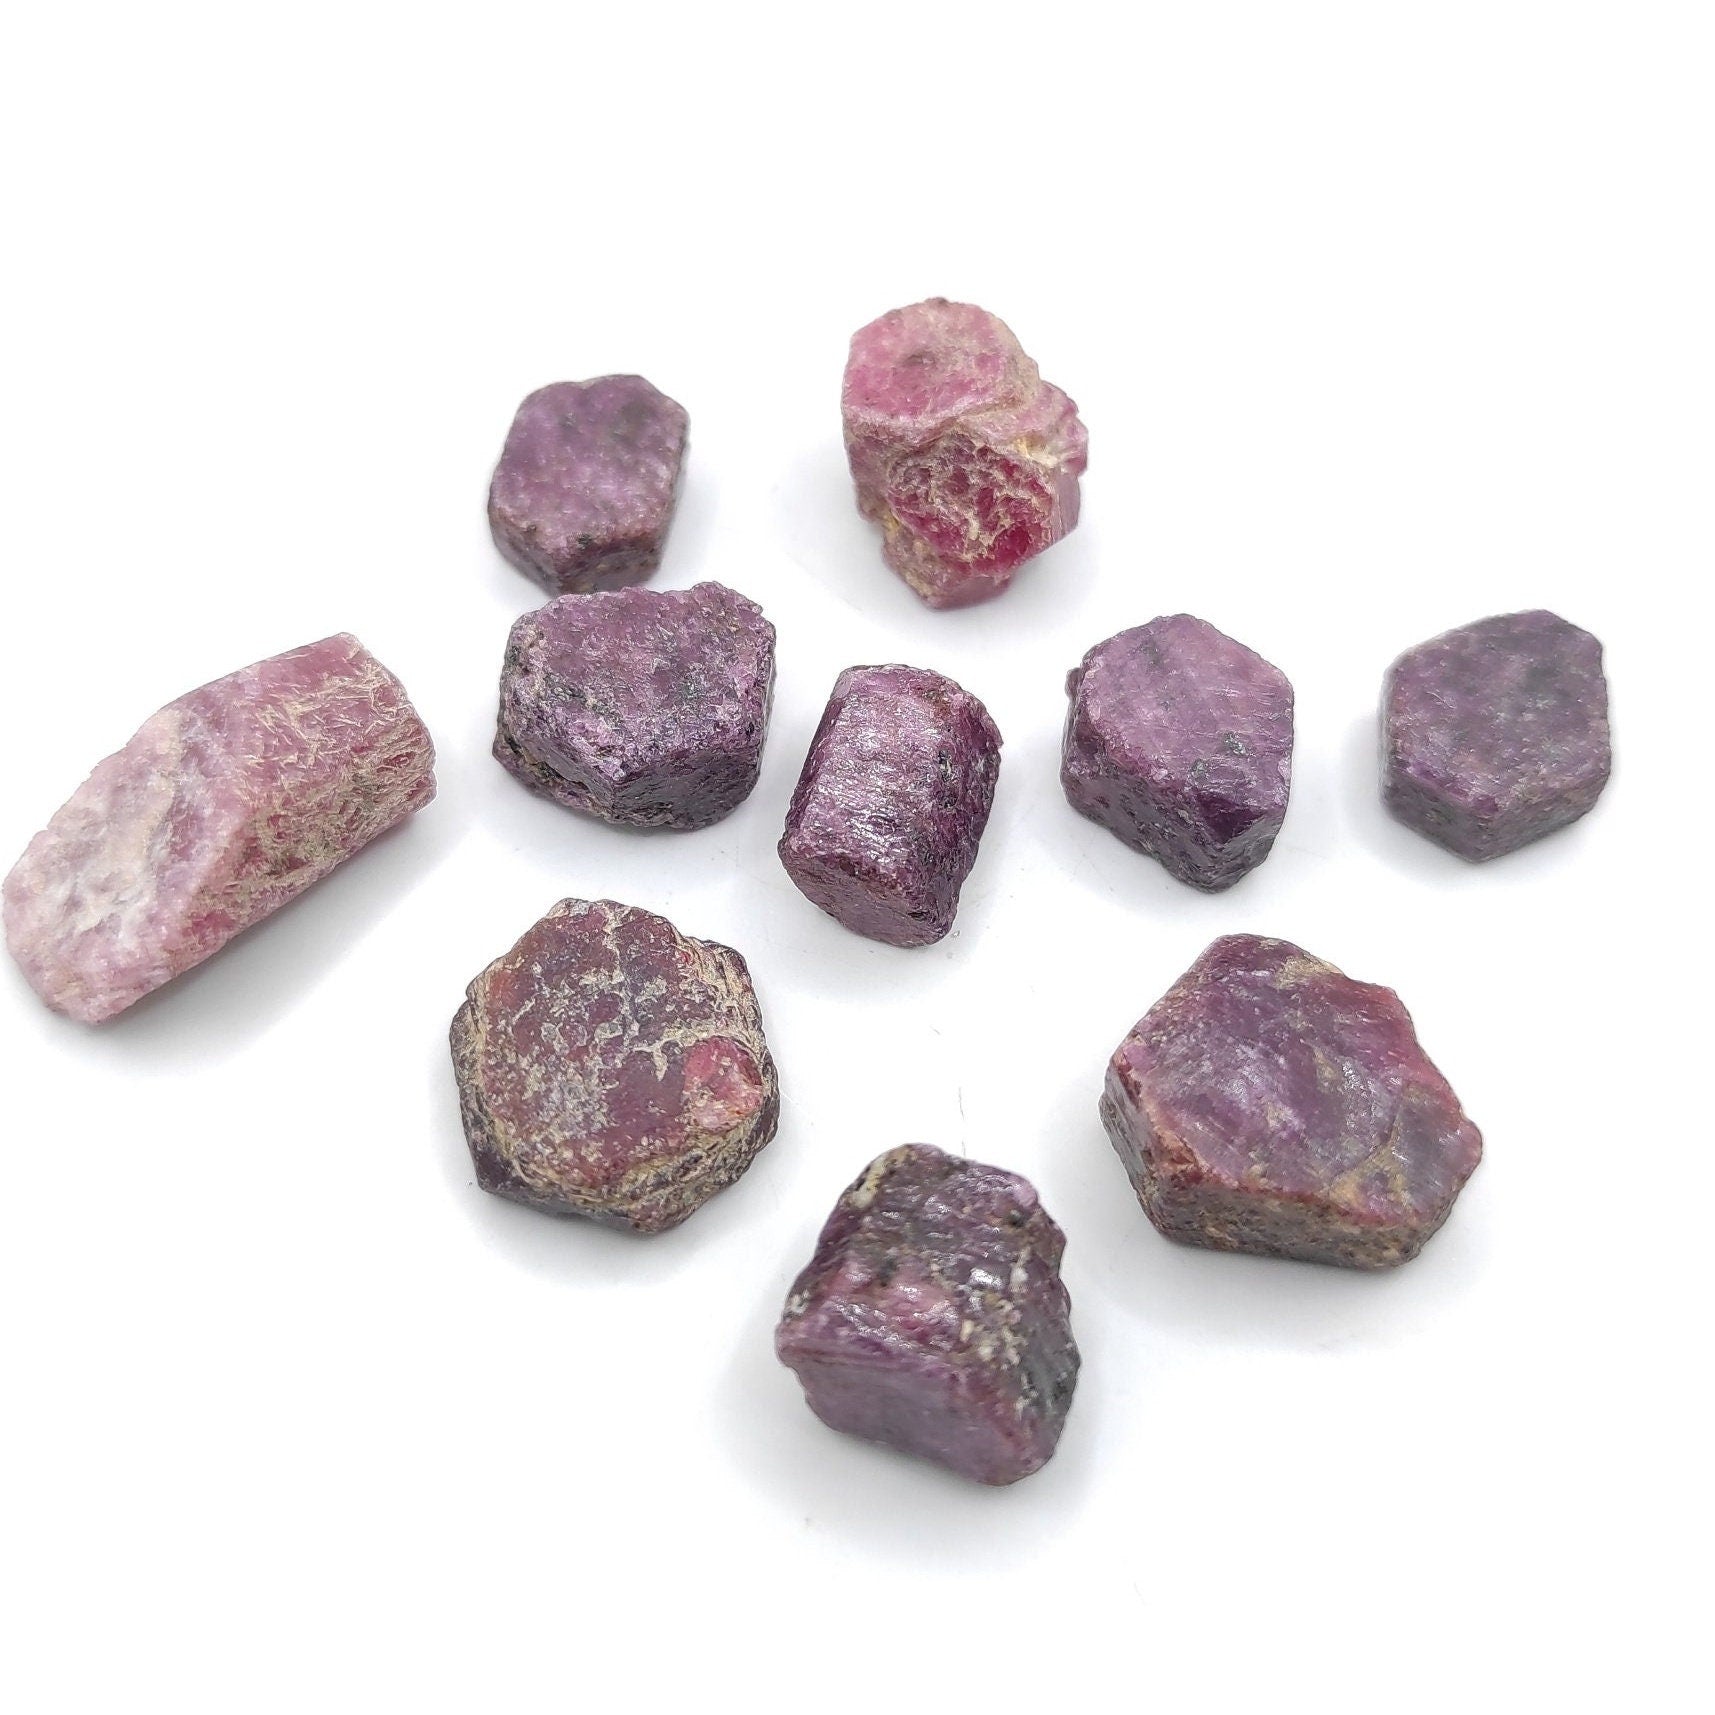 107ct Untreated Ruby Lot - Unheated Ruby Gemstones - Raw Red Ruby from Madagascar - Rough Rubies Gems - Loose Ruby Gemstones - Rough Gems